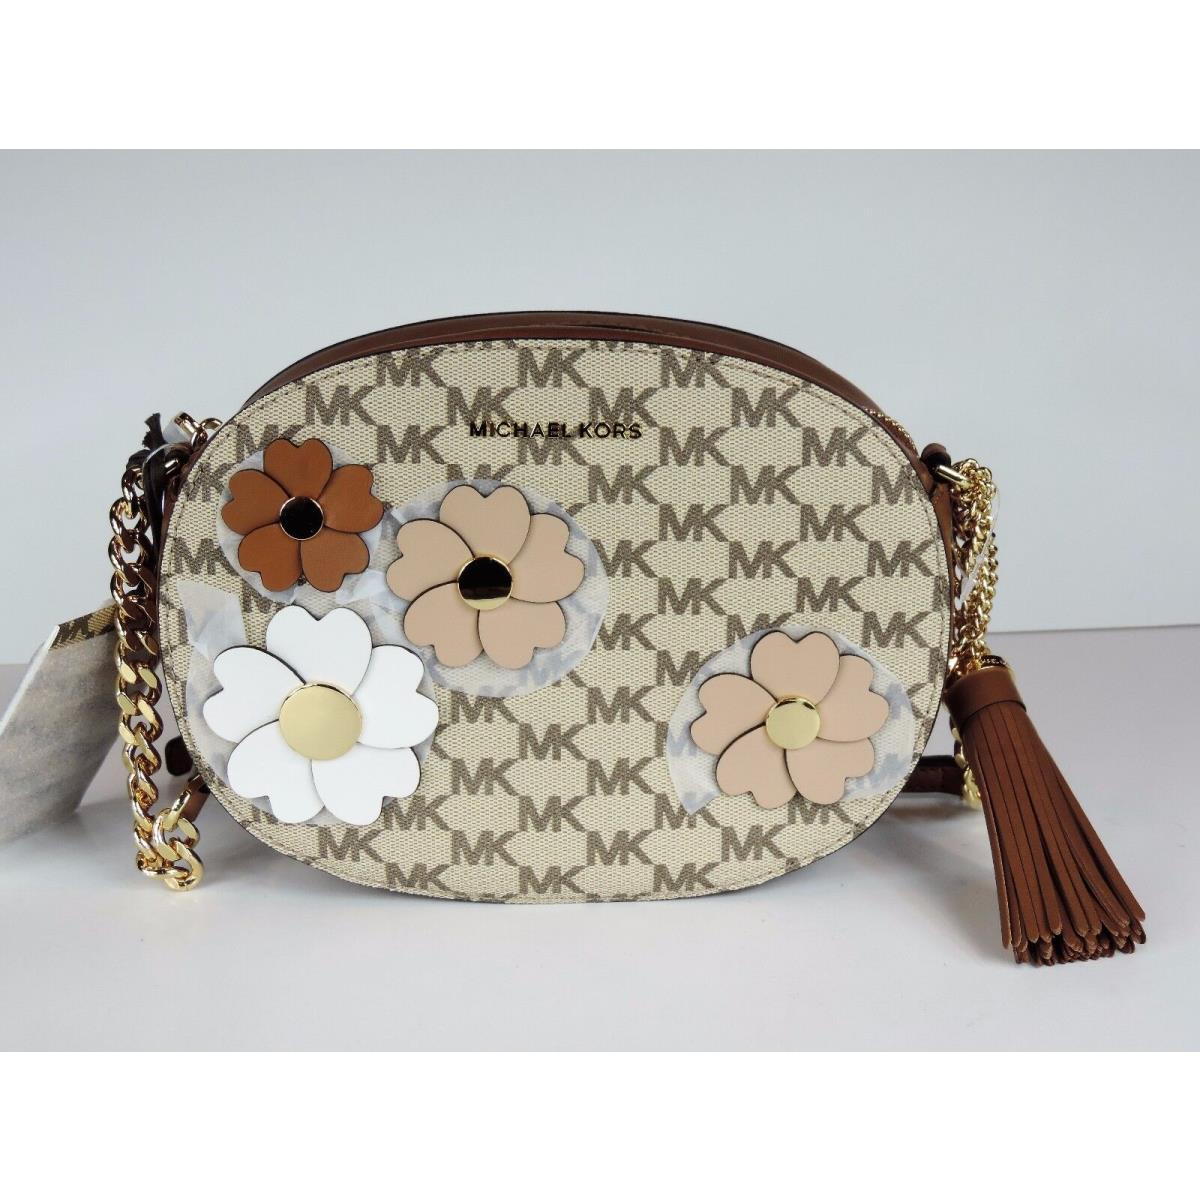 Michael Kors Flora Appliqu Ginny Medium Messenger Luggage Bag Flower Tassel